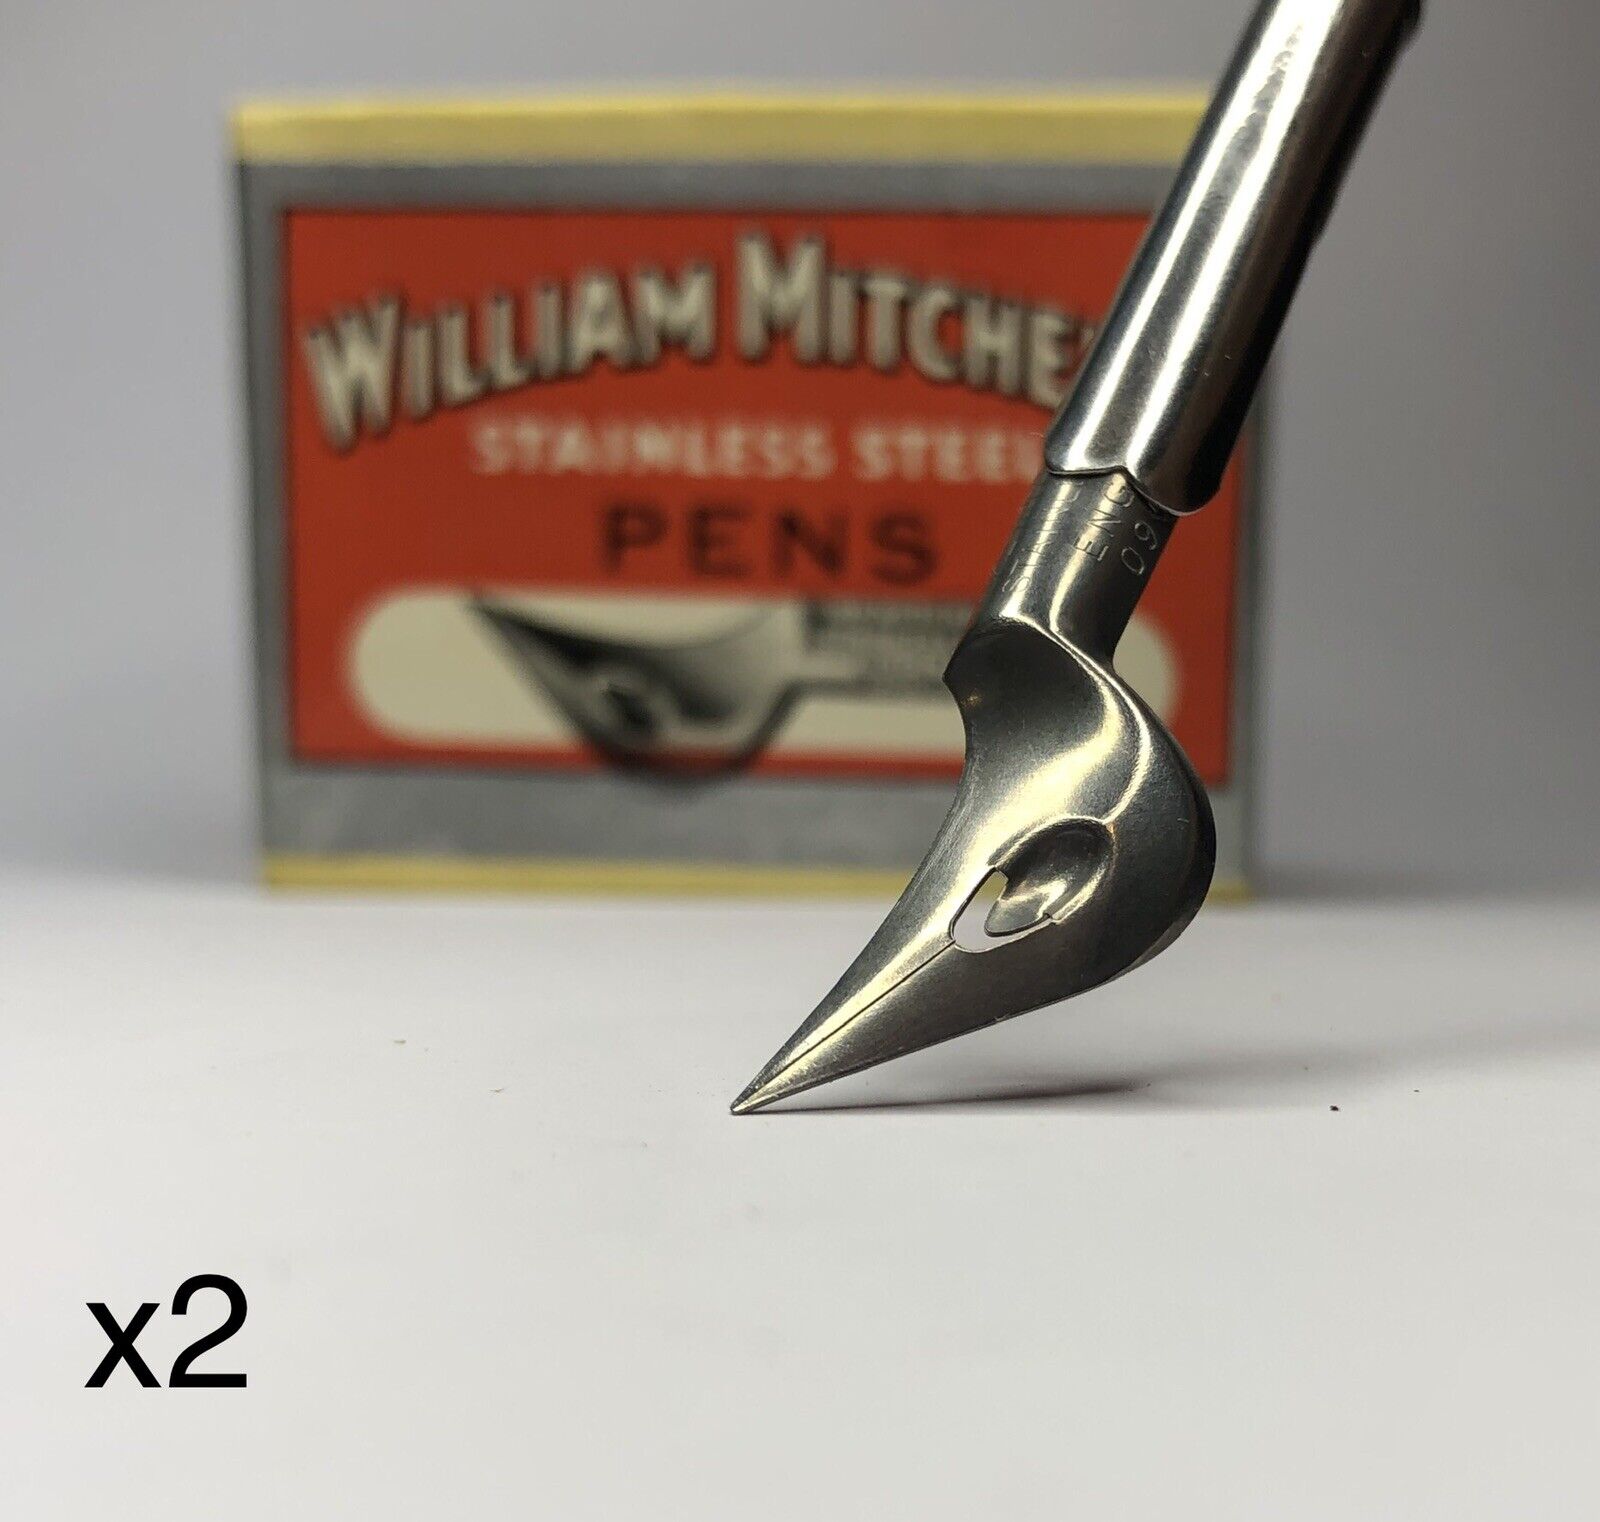 x2 William Mitchell's Stainless Steel Oblique 0950 Pen Nibs NEW Vintage Dip Pen William Mitchell